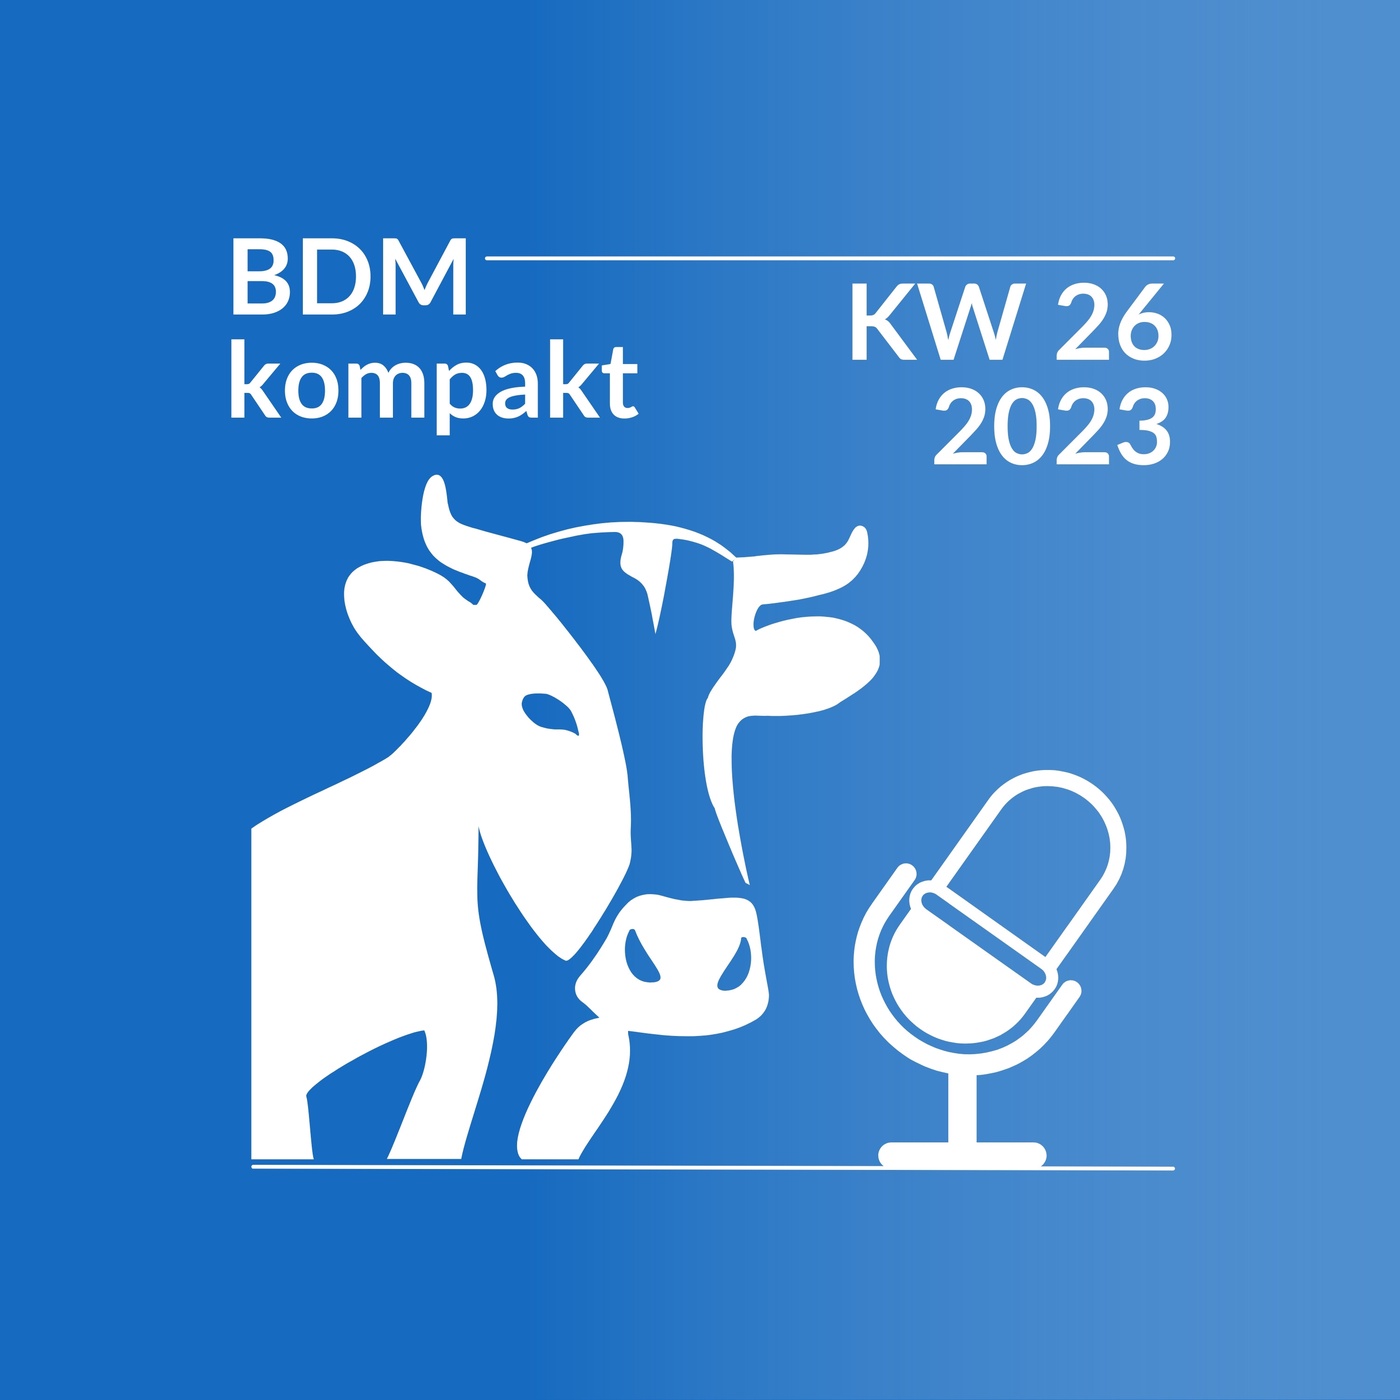 BDM kompakt KW 26/2023